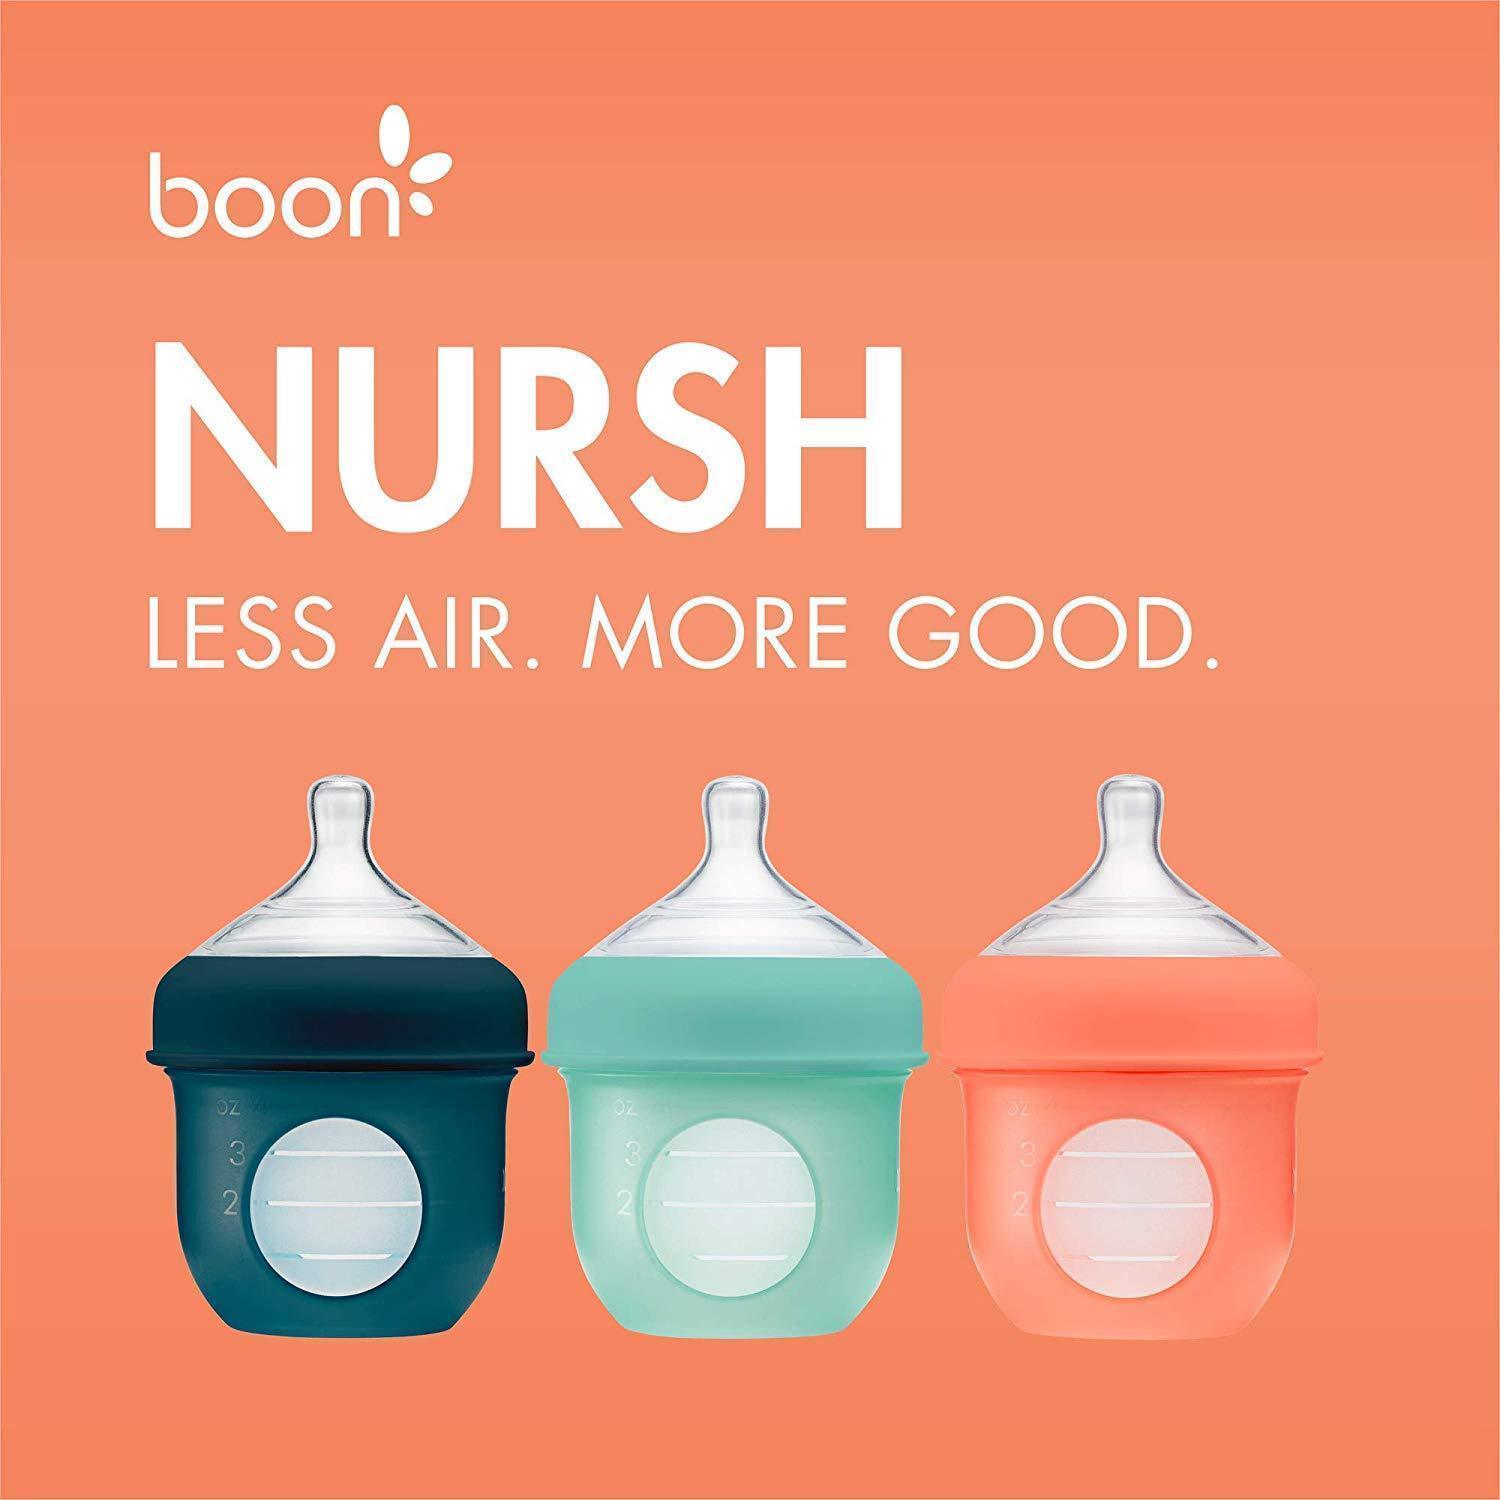 Boon NURSH Silicone Pouch Bottle 4 oz (3-Pack) - Mint/Cantaloupe/Navy-BOON-Little Giant Kidz